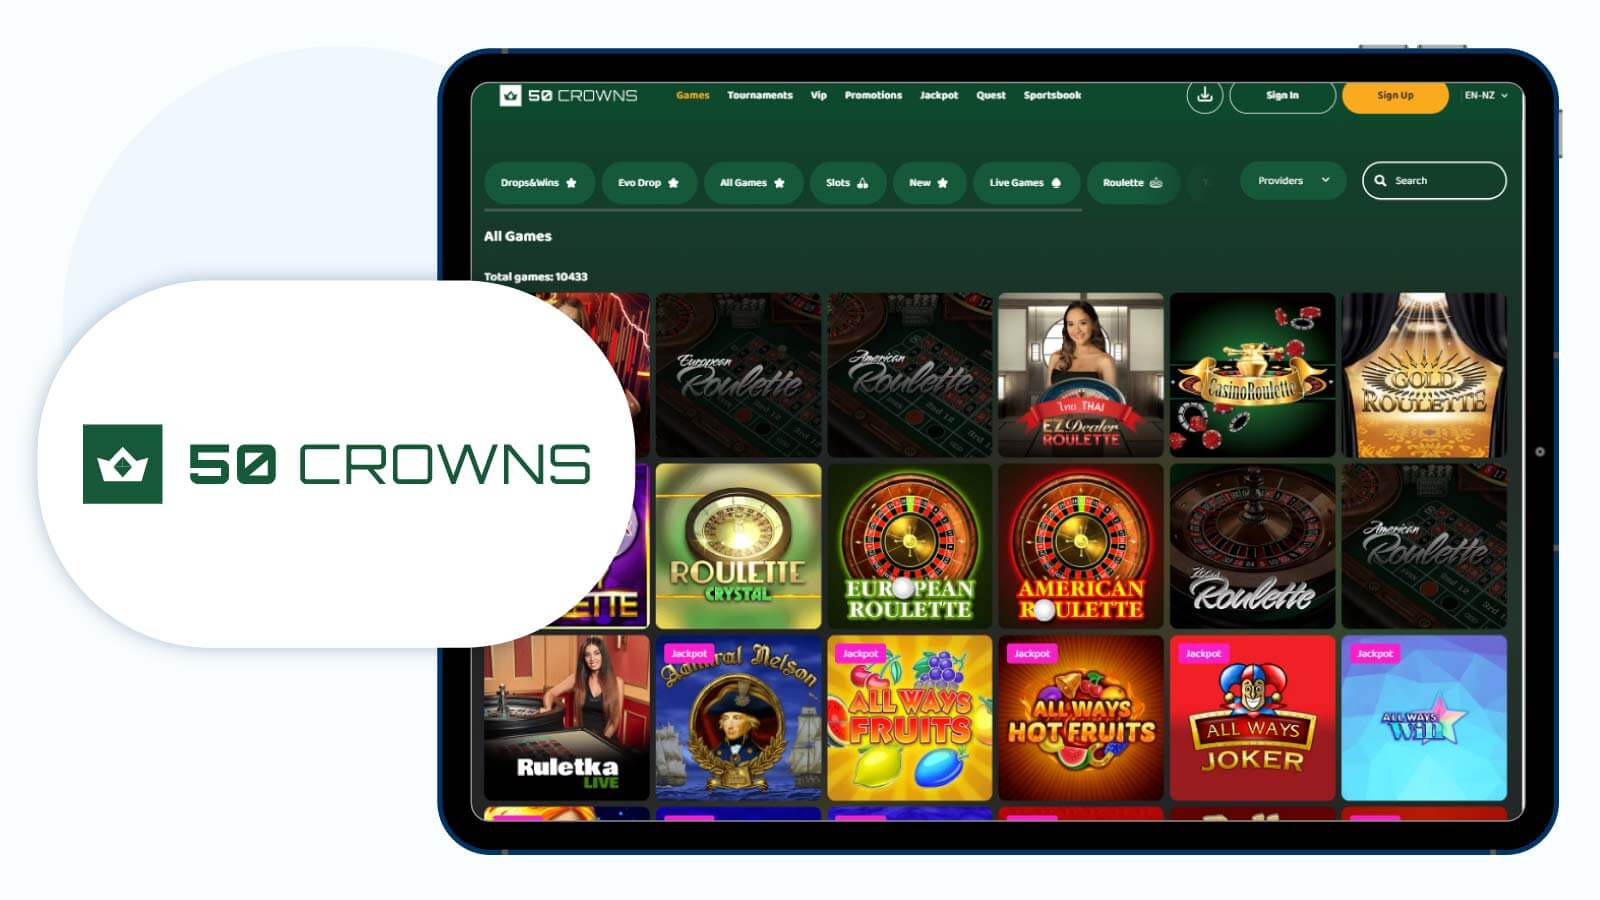 50Crowns-Casino-Runner-Up-Playtech-Casino-in-NZ